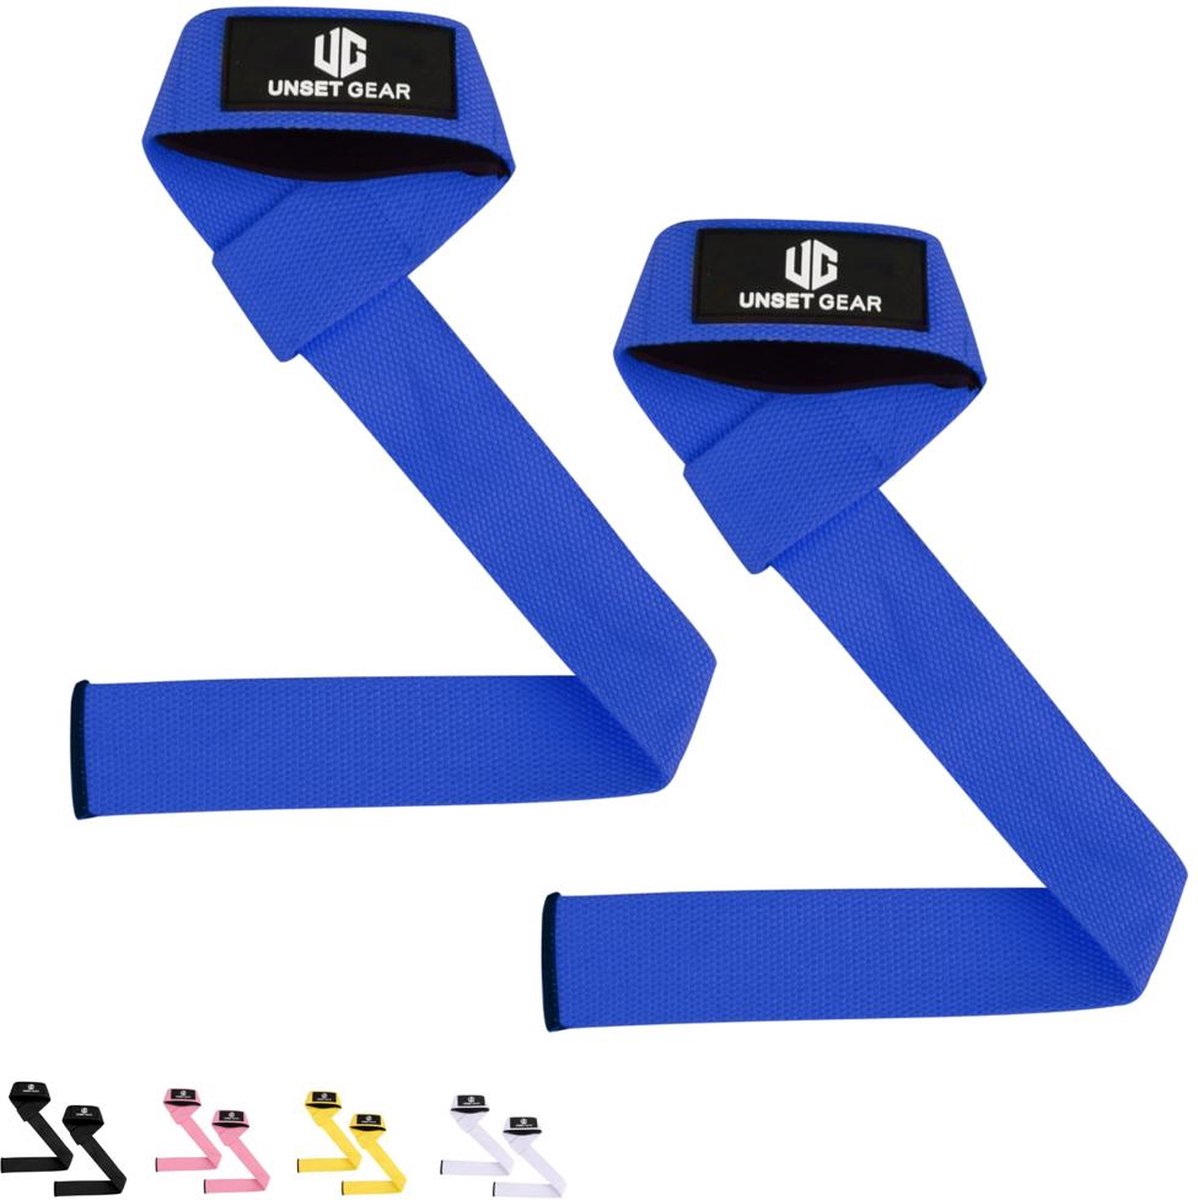 Unset Gear - Lifting straps - Blauw- Fitness - Powerliften - Extra grip - Bodybuilding